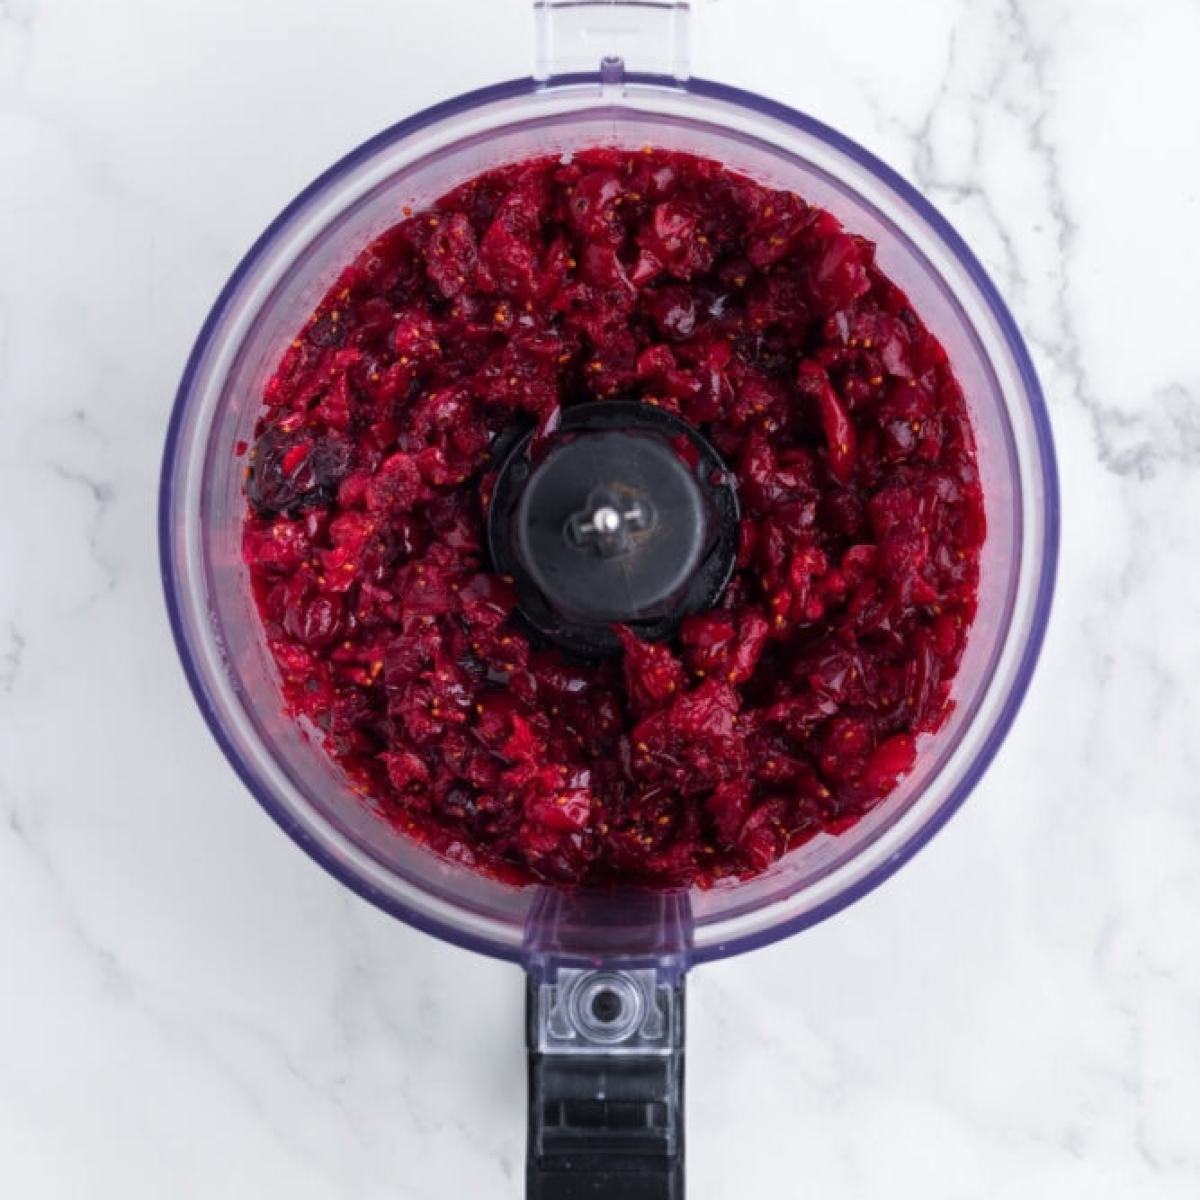 cranberries in a food processor